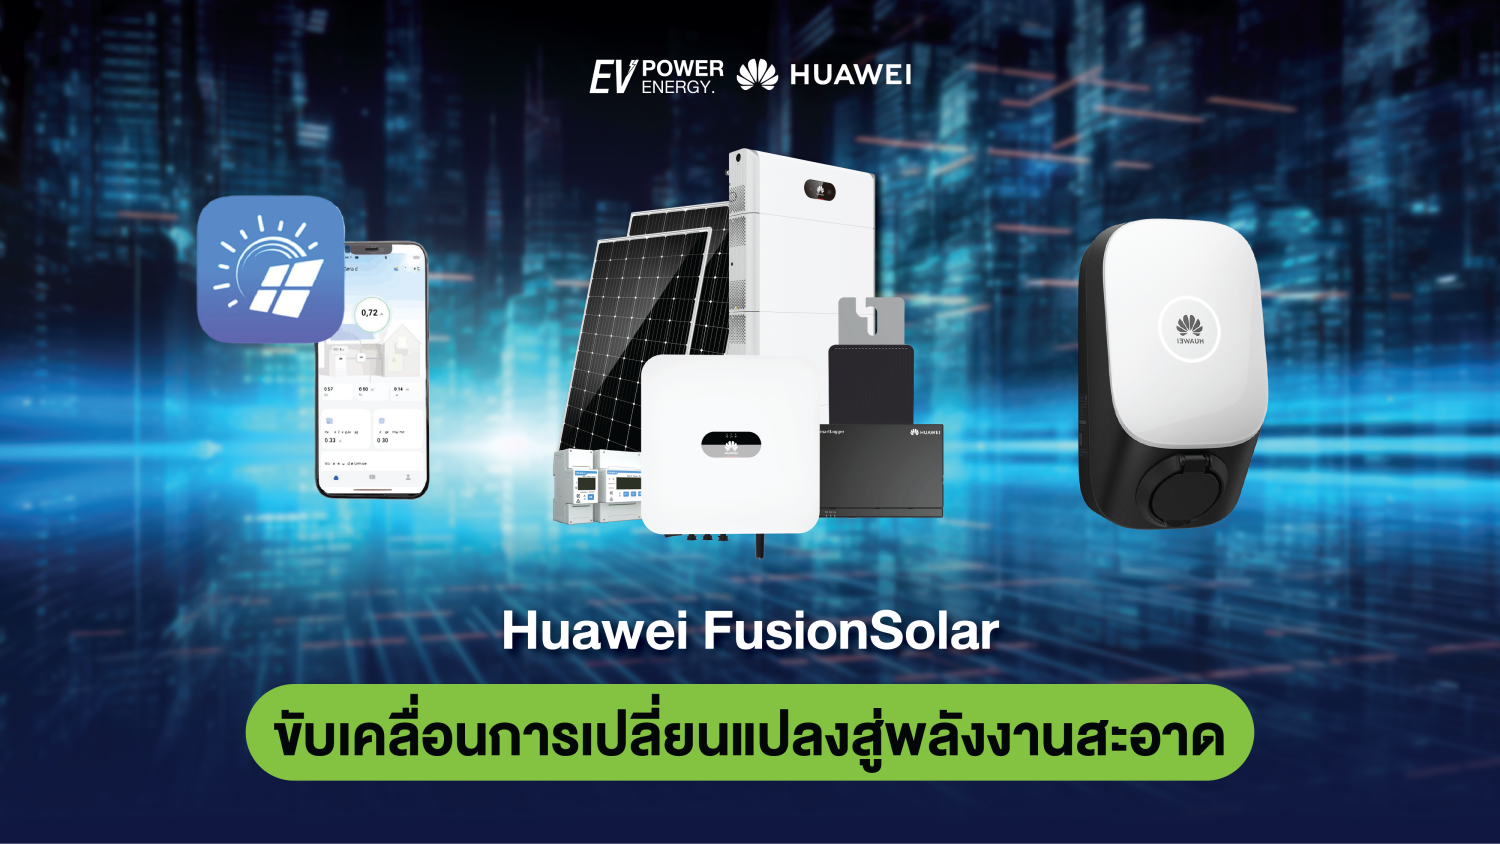 Huawei FusionSolar ขับเคลื่อนการเปลี่ยนแปลงสู่พลังงานสะอาด 1